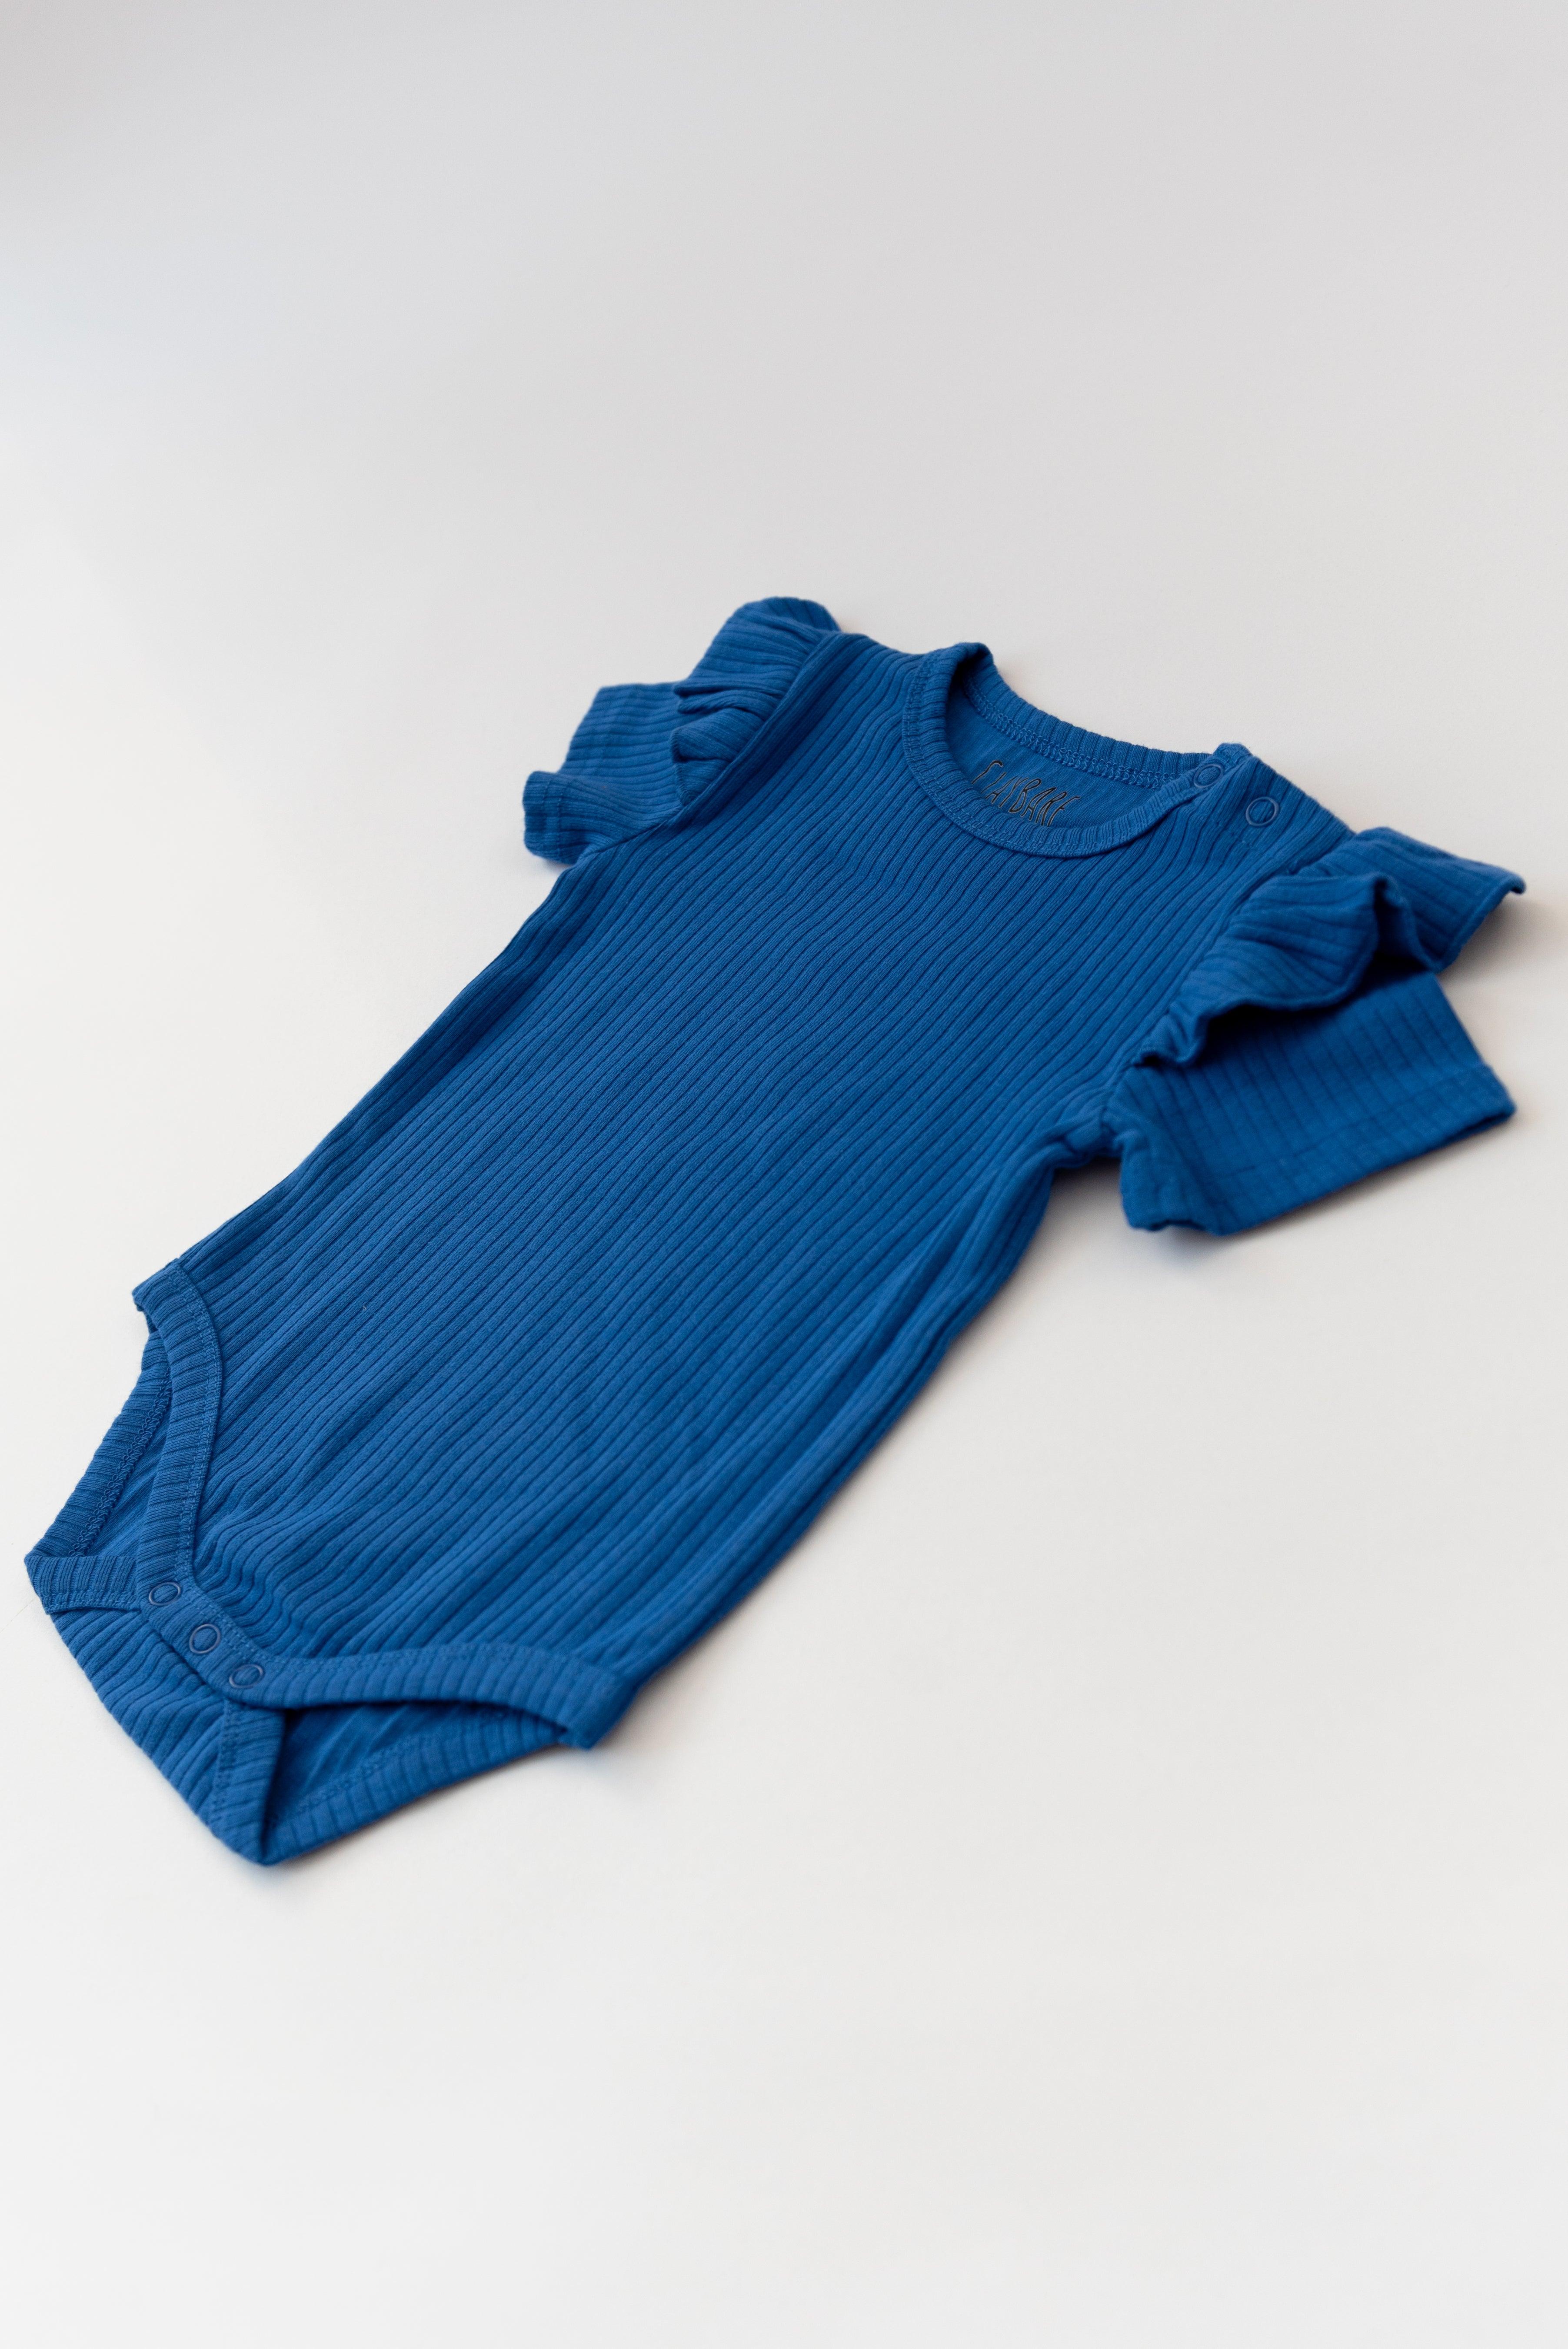 files/royal-blue-frill-short-sleeve-bodysuit-claybearofficial-4.jpg